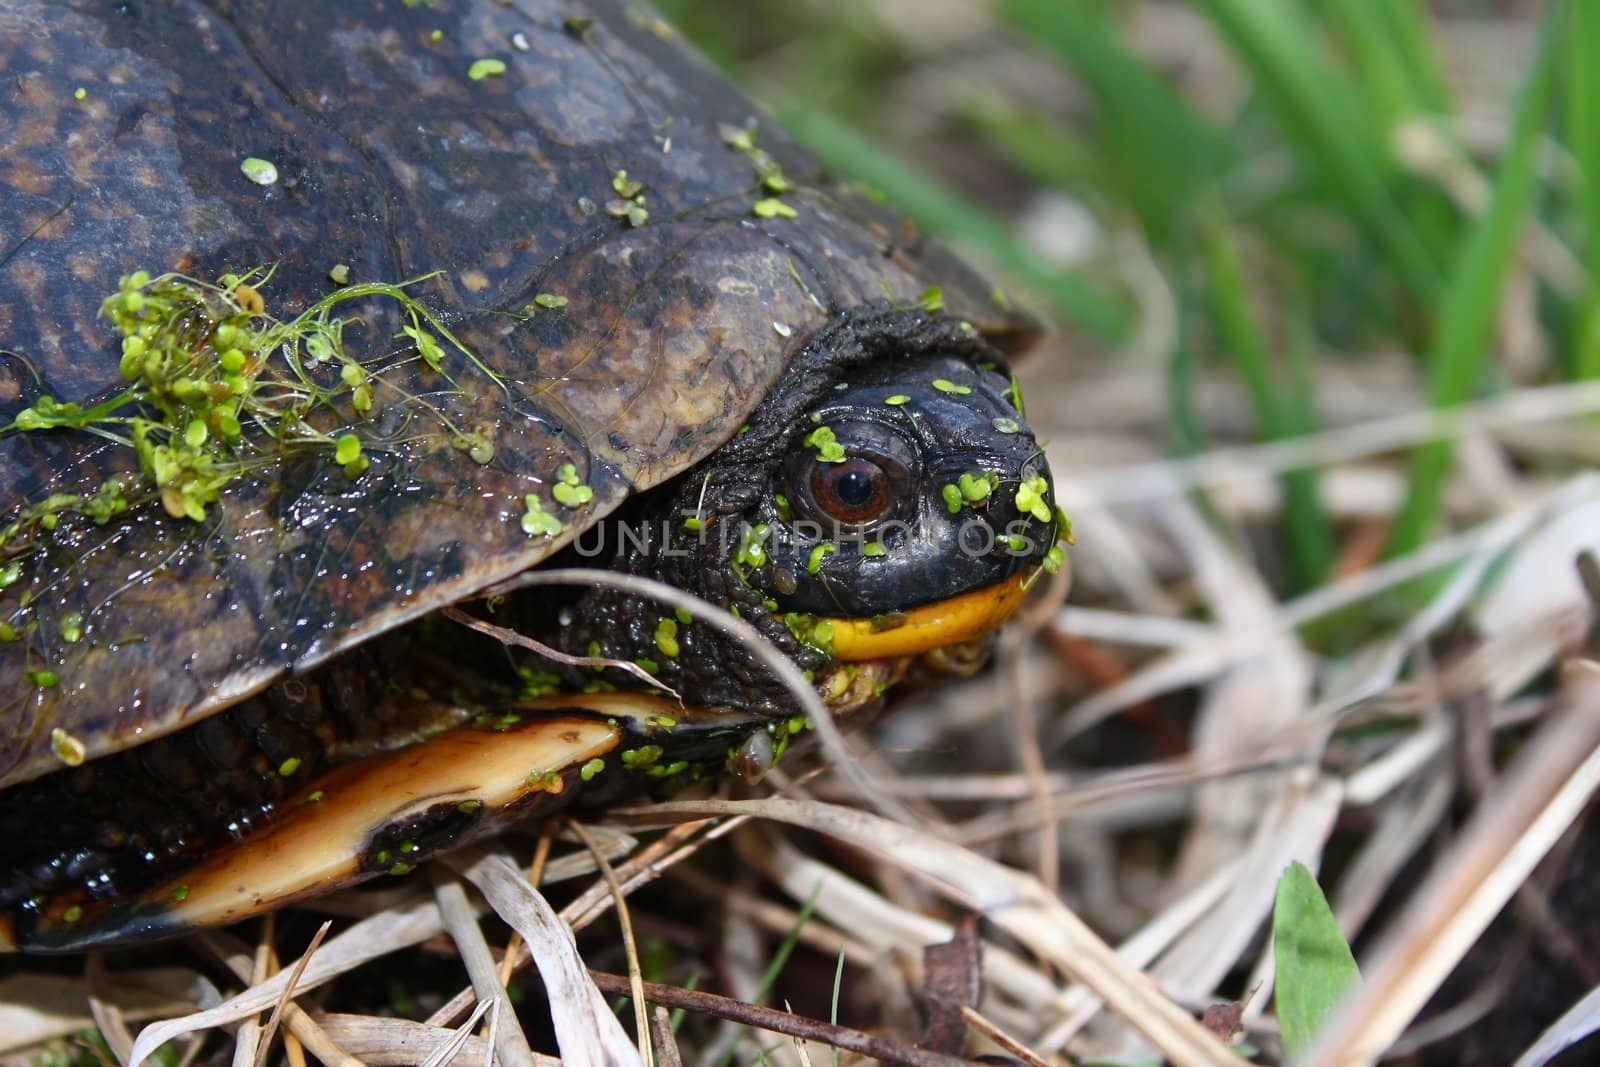 Blandings Turtle (Emydoidea blandingii) by Wirepec